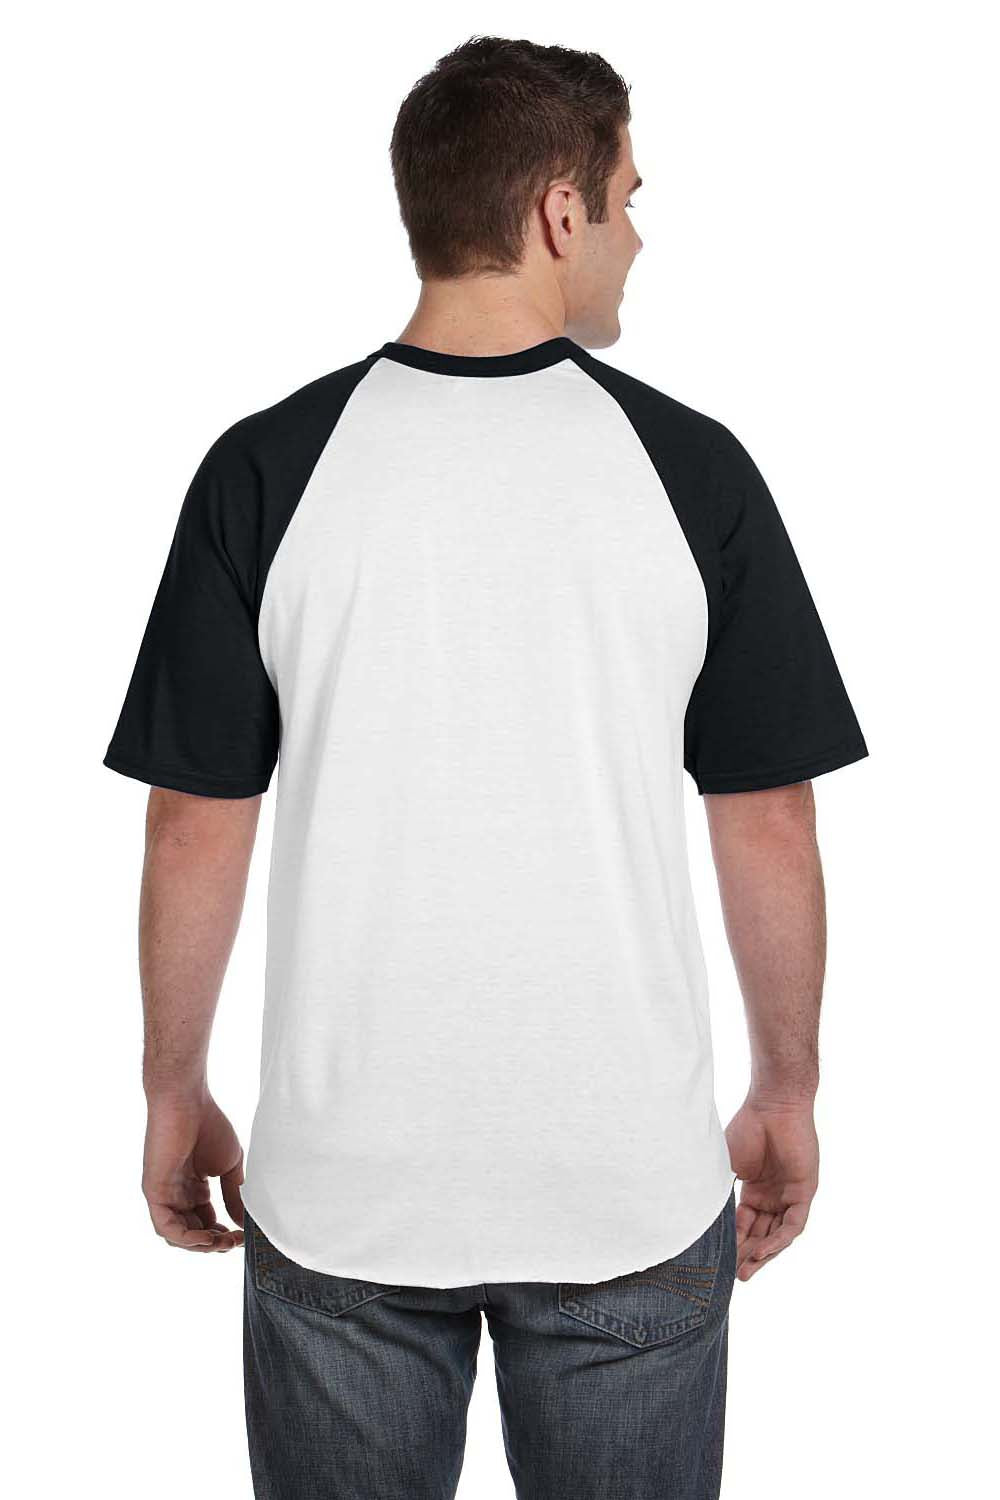 Augusta Sportswear 423 Mens Short Sleeve Crewneck T-Shirt White/Black Model Back